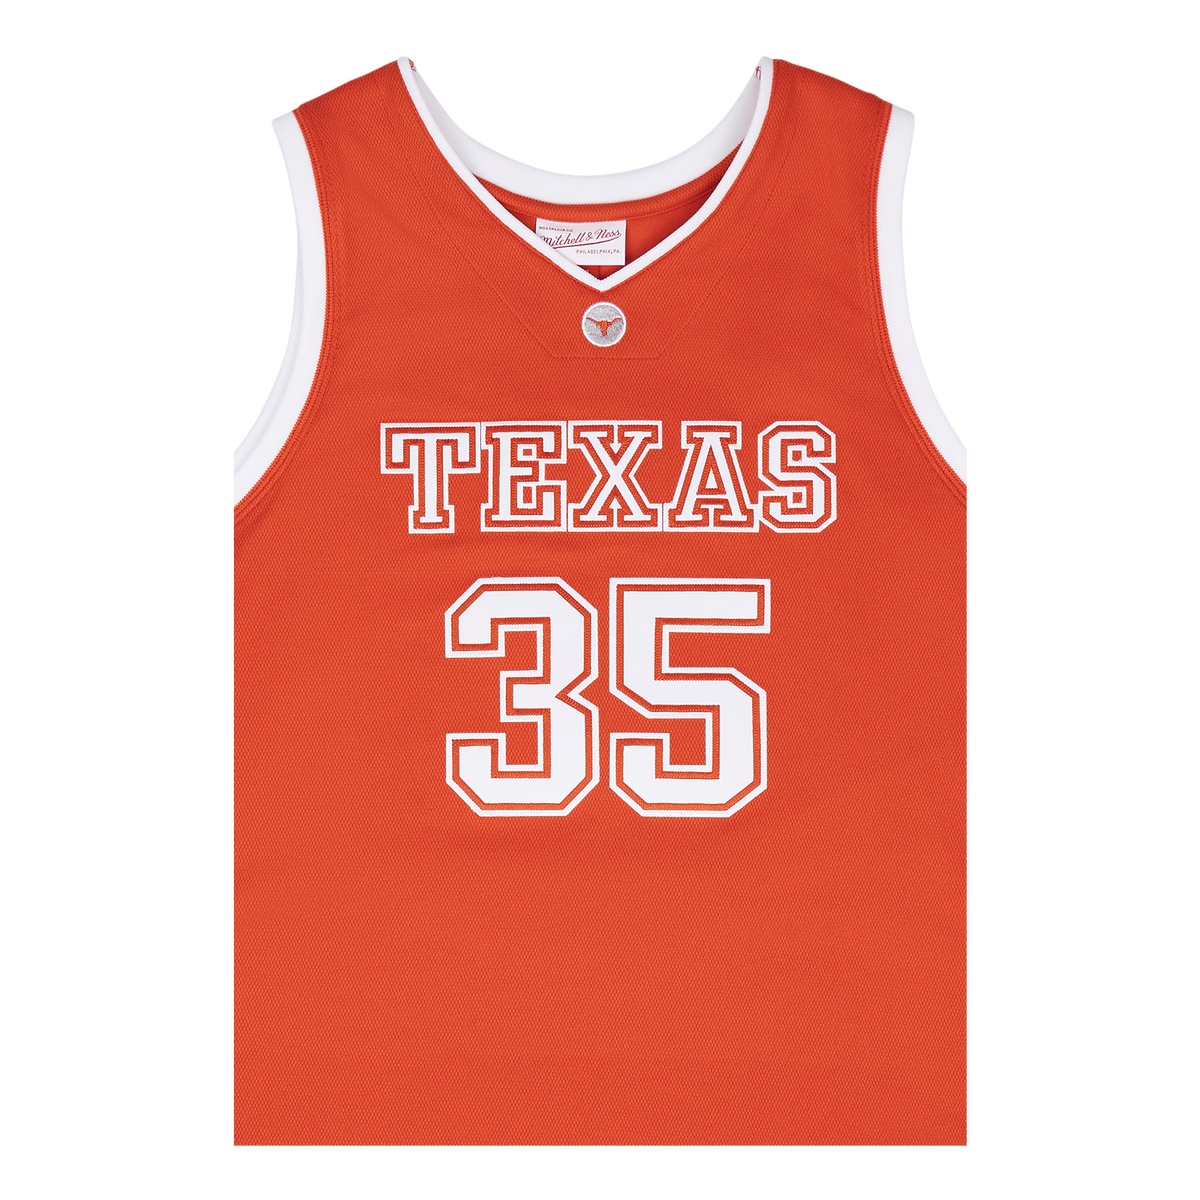 Texas Longhorns Swingman Jersey - 06 Durant